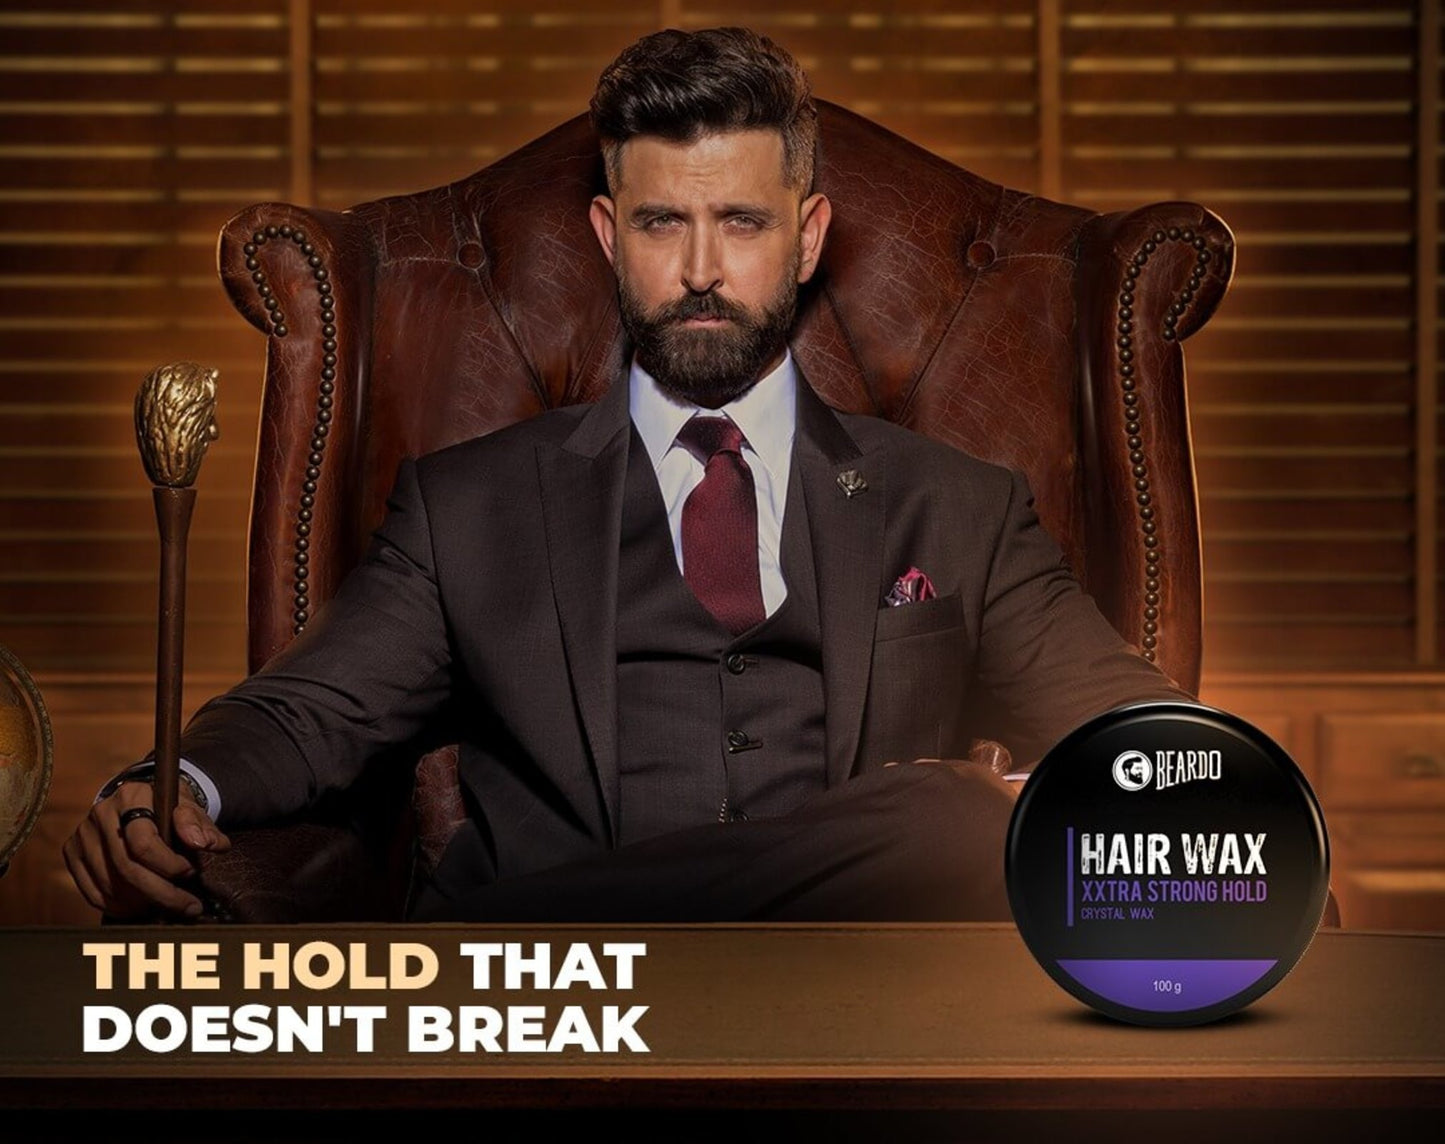 XXTRA Strong Hold, beardo wax, hair wax for men